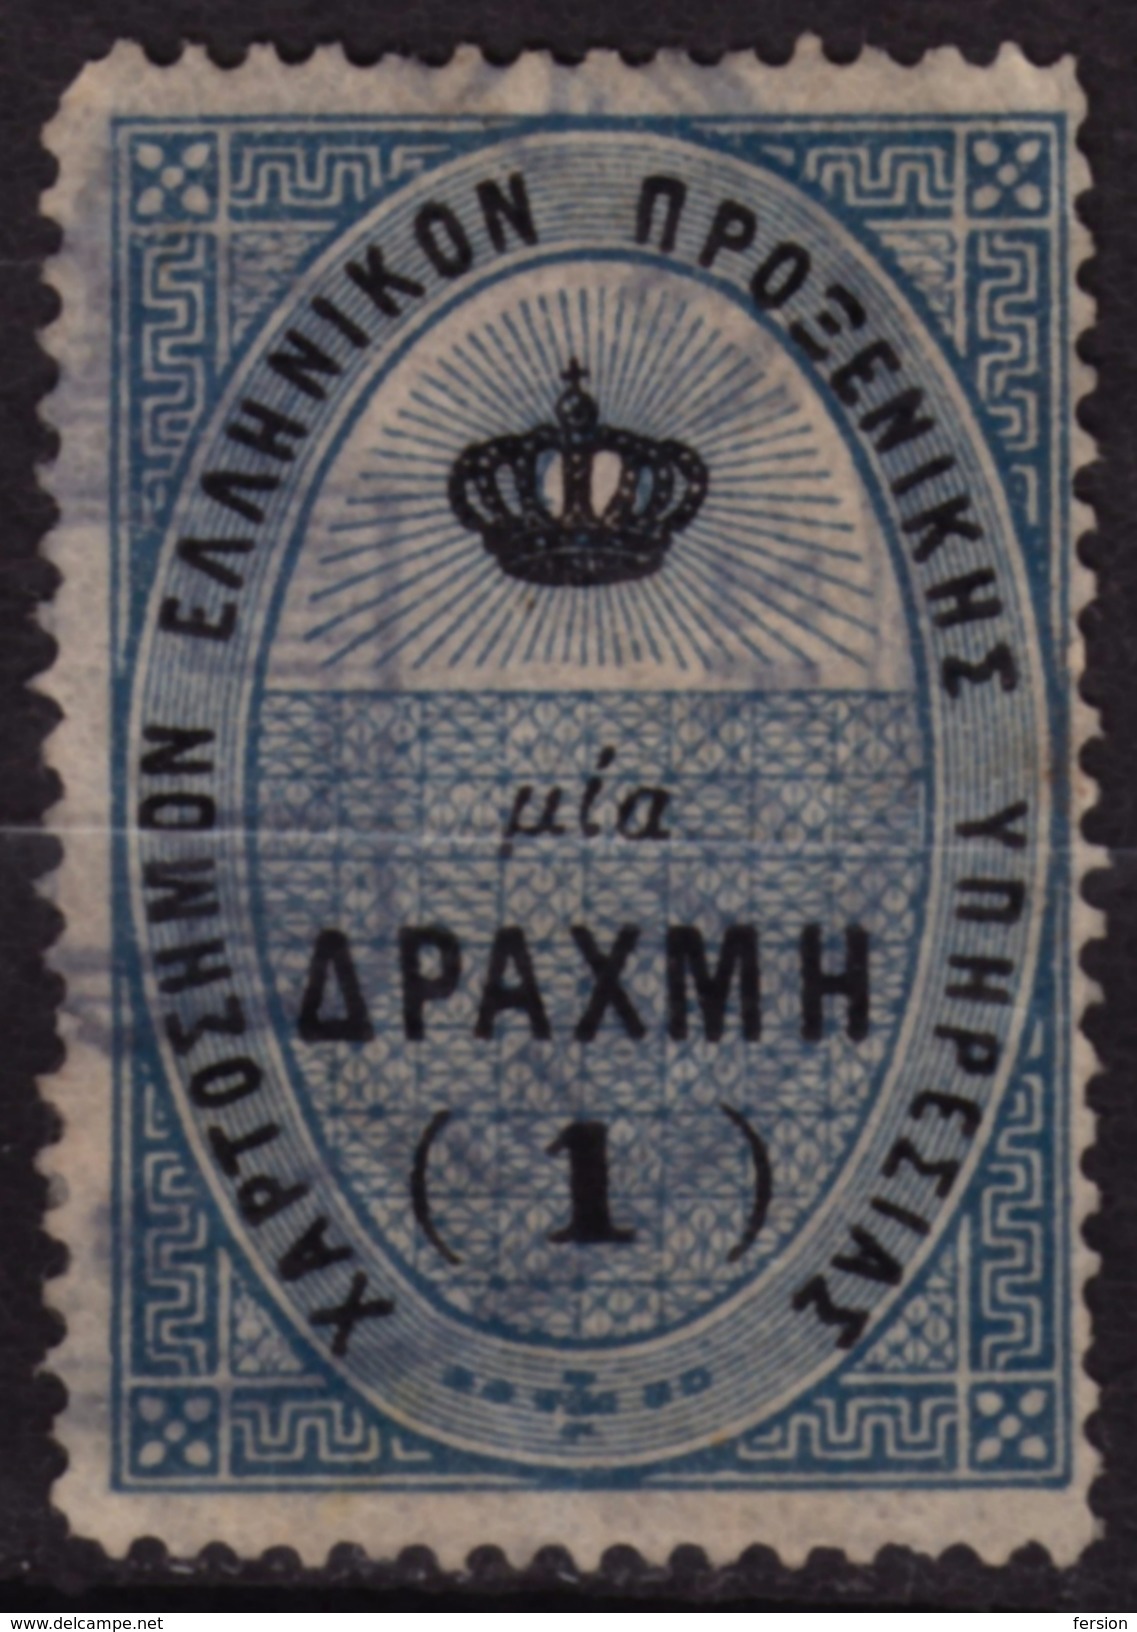 GREECE - FISCAL REVENUE Stamp - 1 Drachma - Revenue Stamps